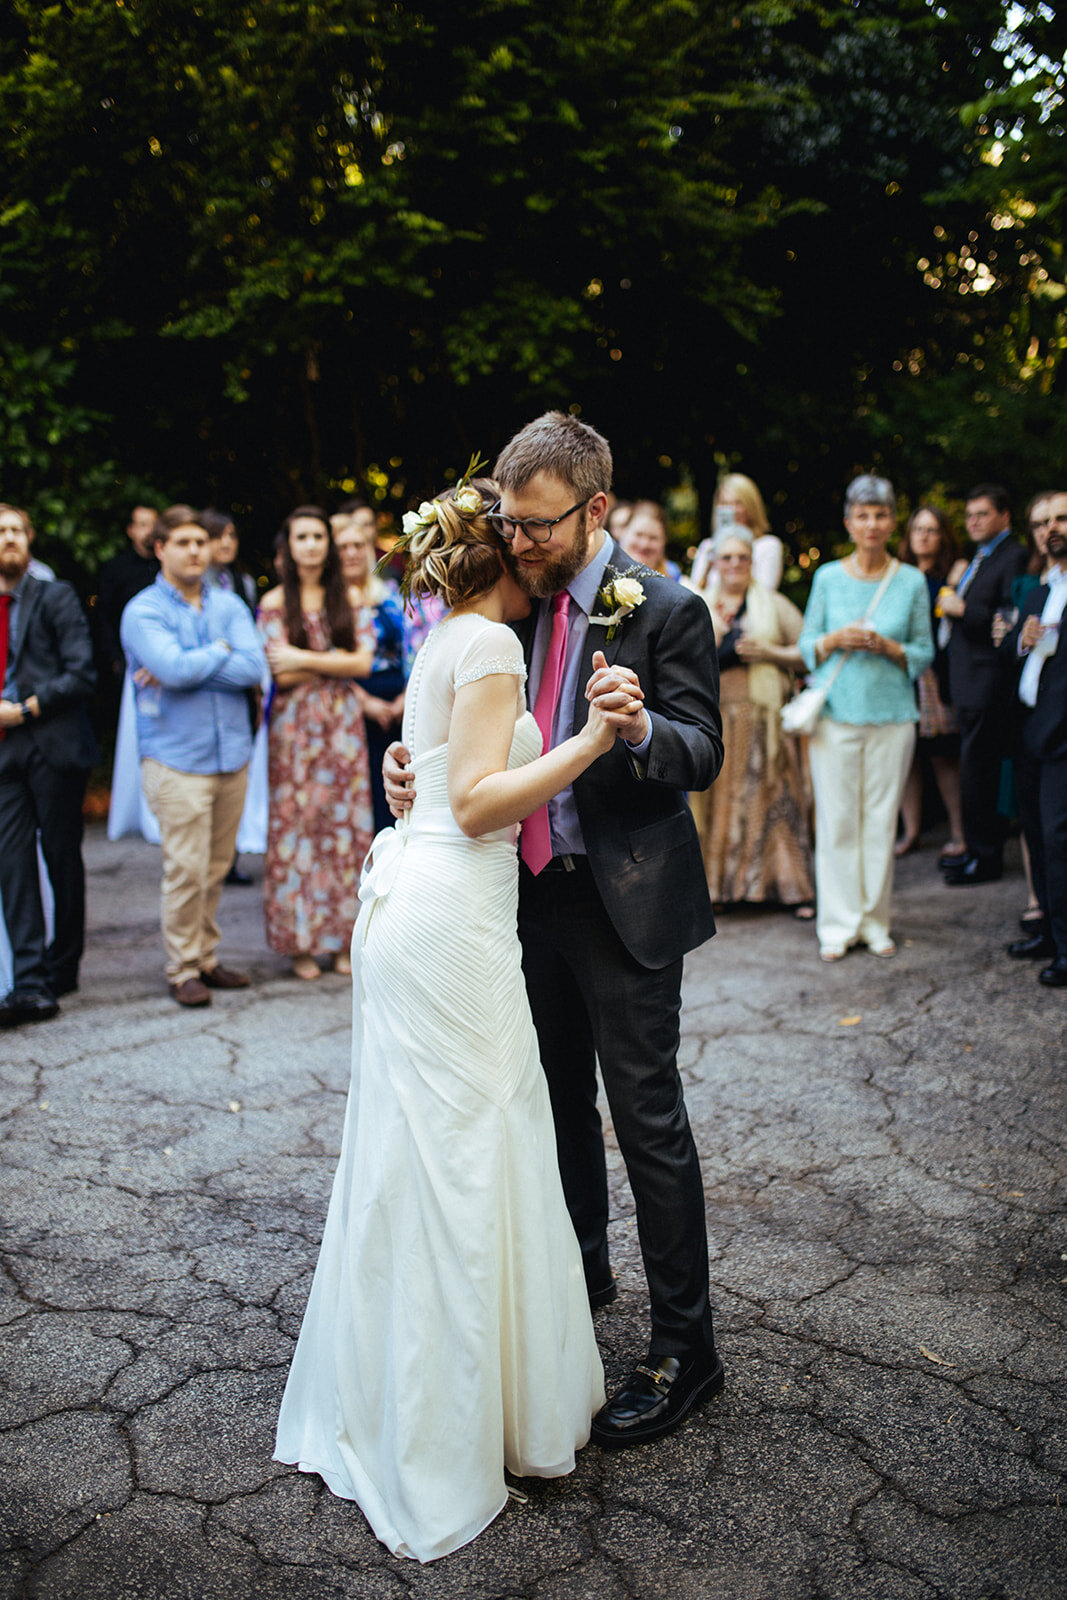 Bride and grooms first dance outside in Atlanta GA Shawnee Custalow Queer Wedding Photographer